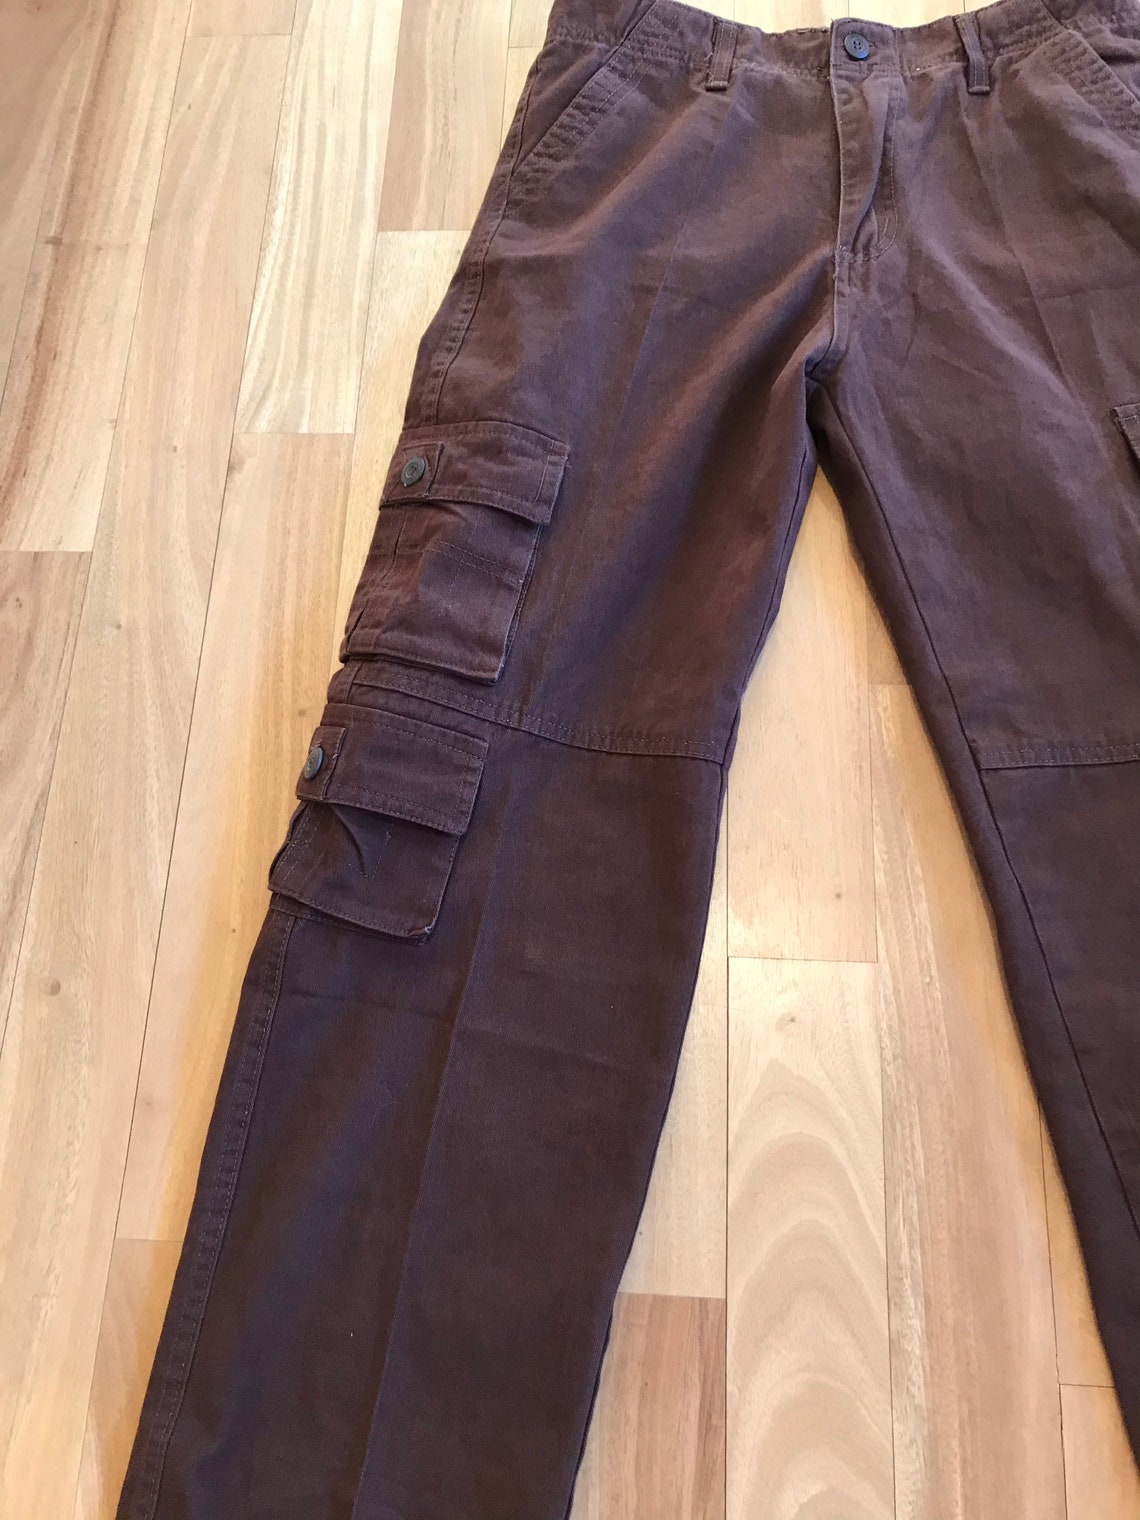 Vintage cargo pants chocolate brown | Etsy